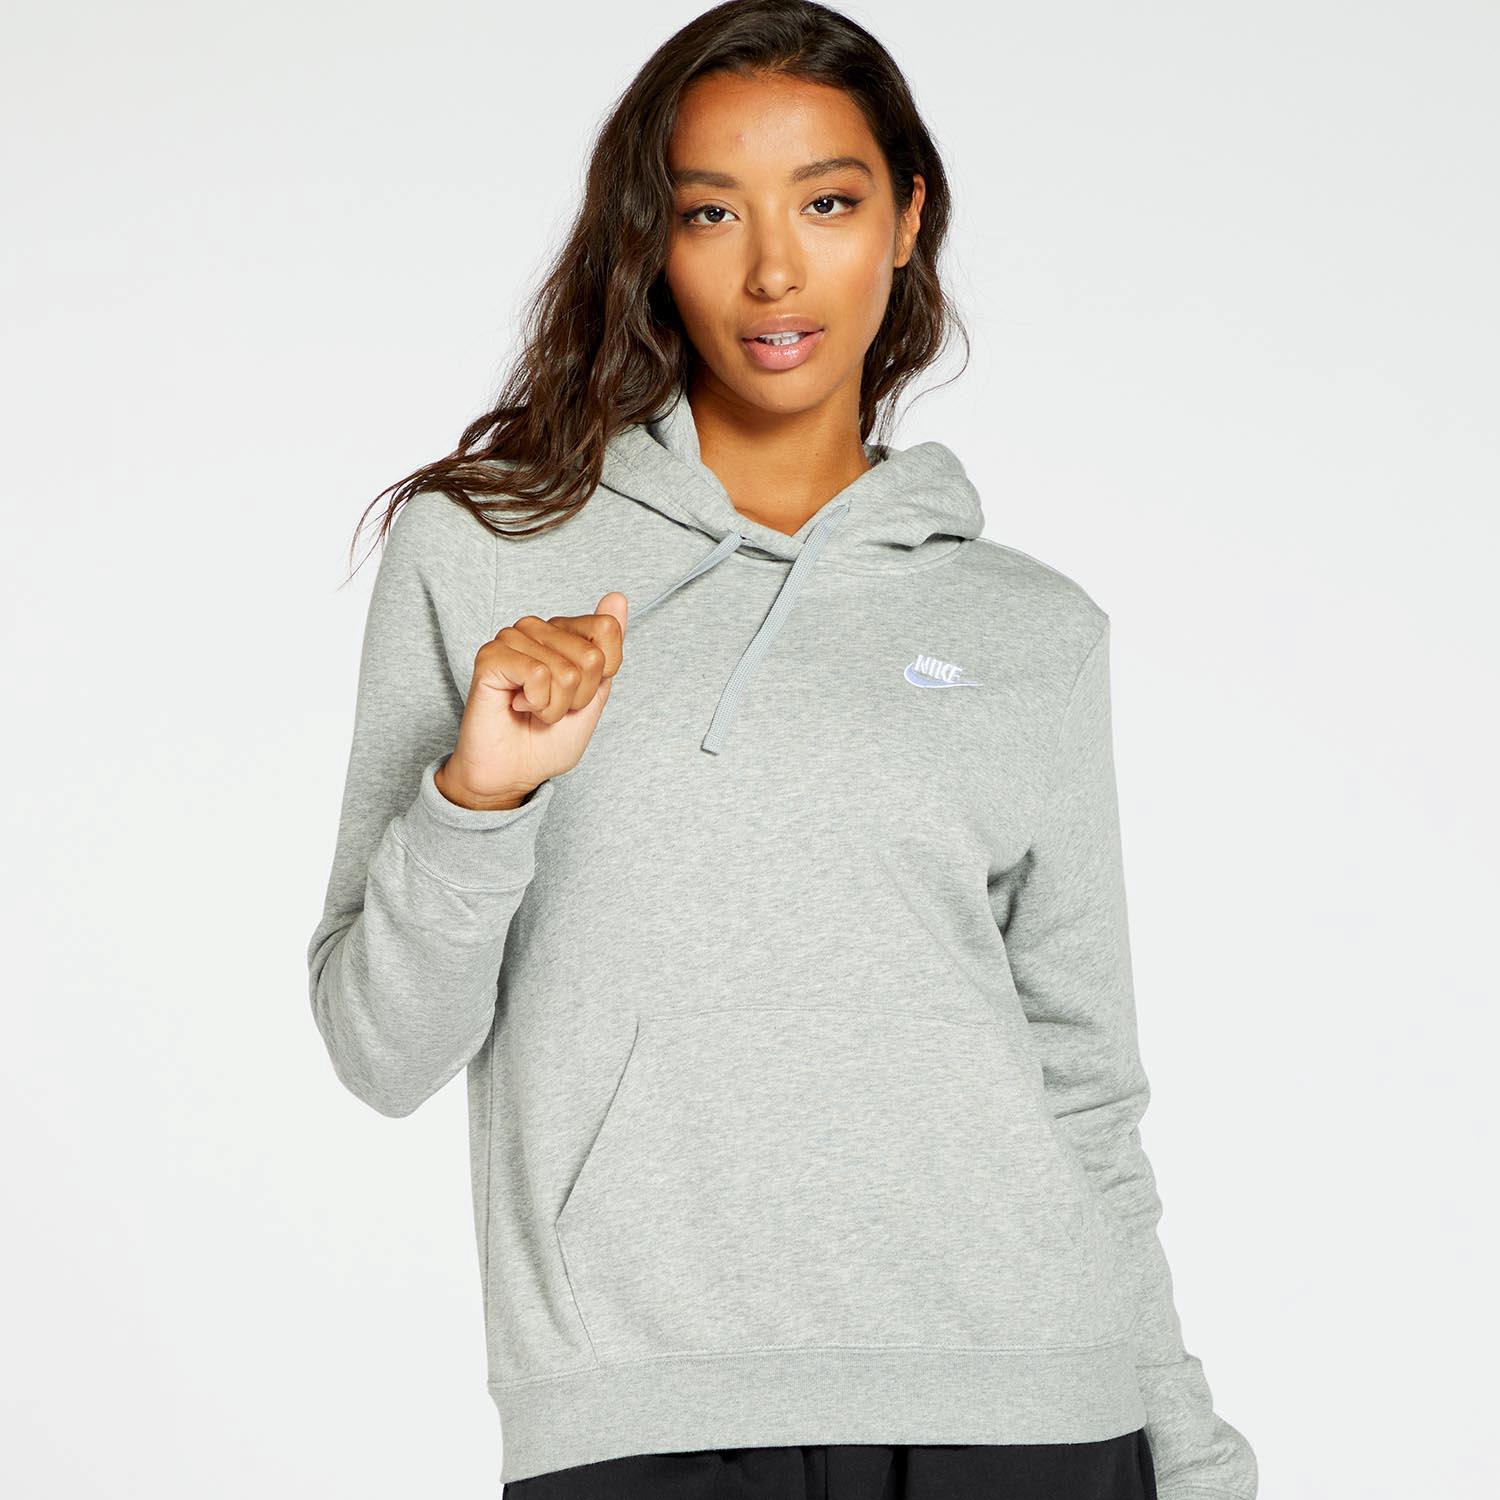 Nike Small Logo - Cinza - Sweatshirt Mulher tamanho L